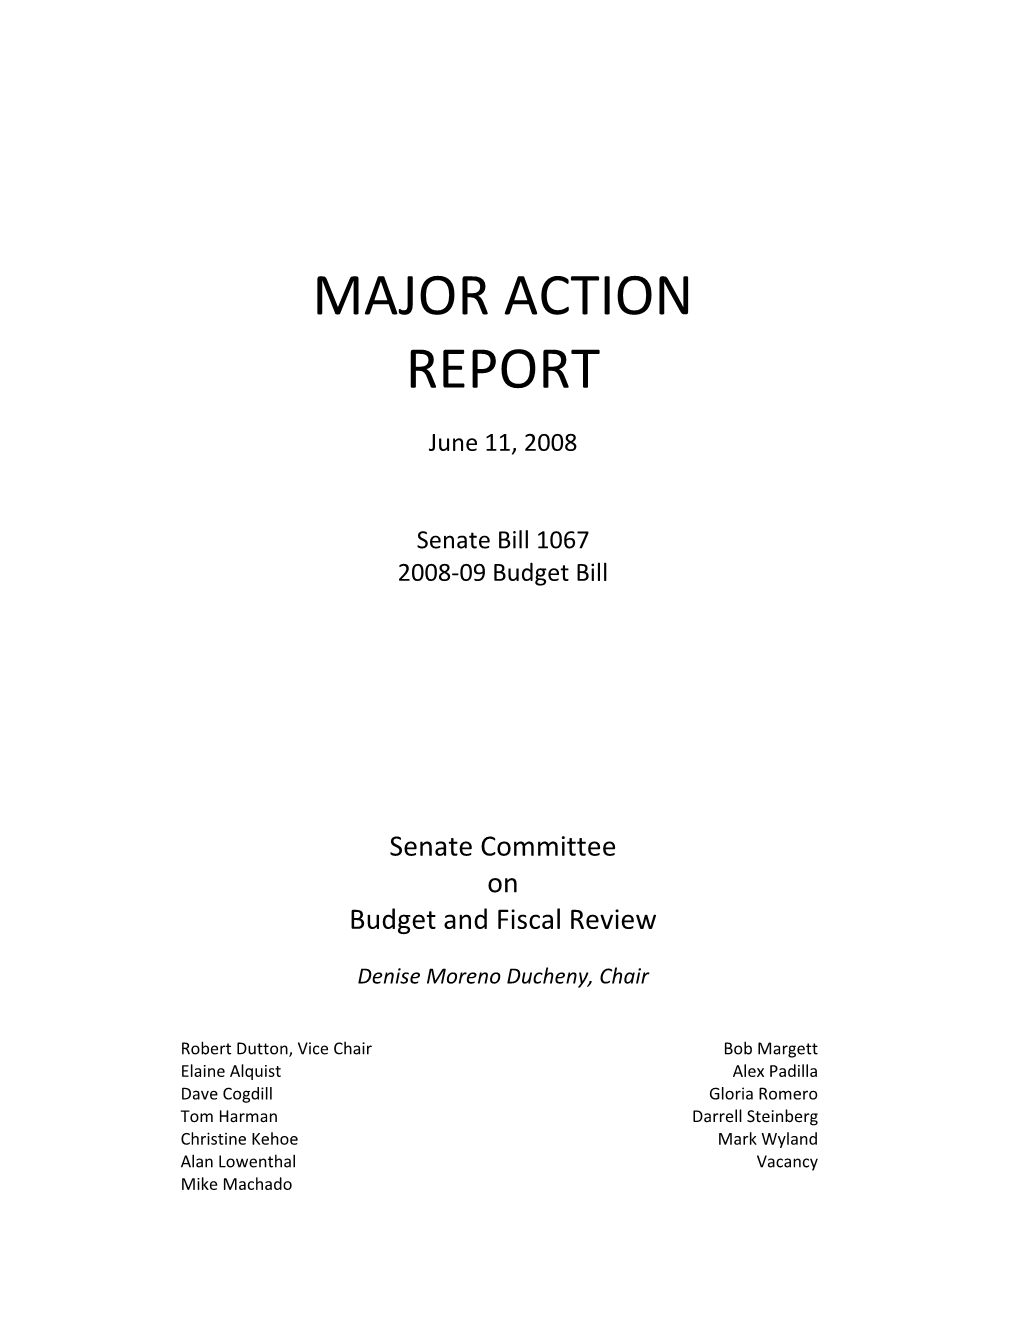 Major Action Report Dated June 11, 2008